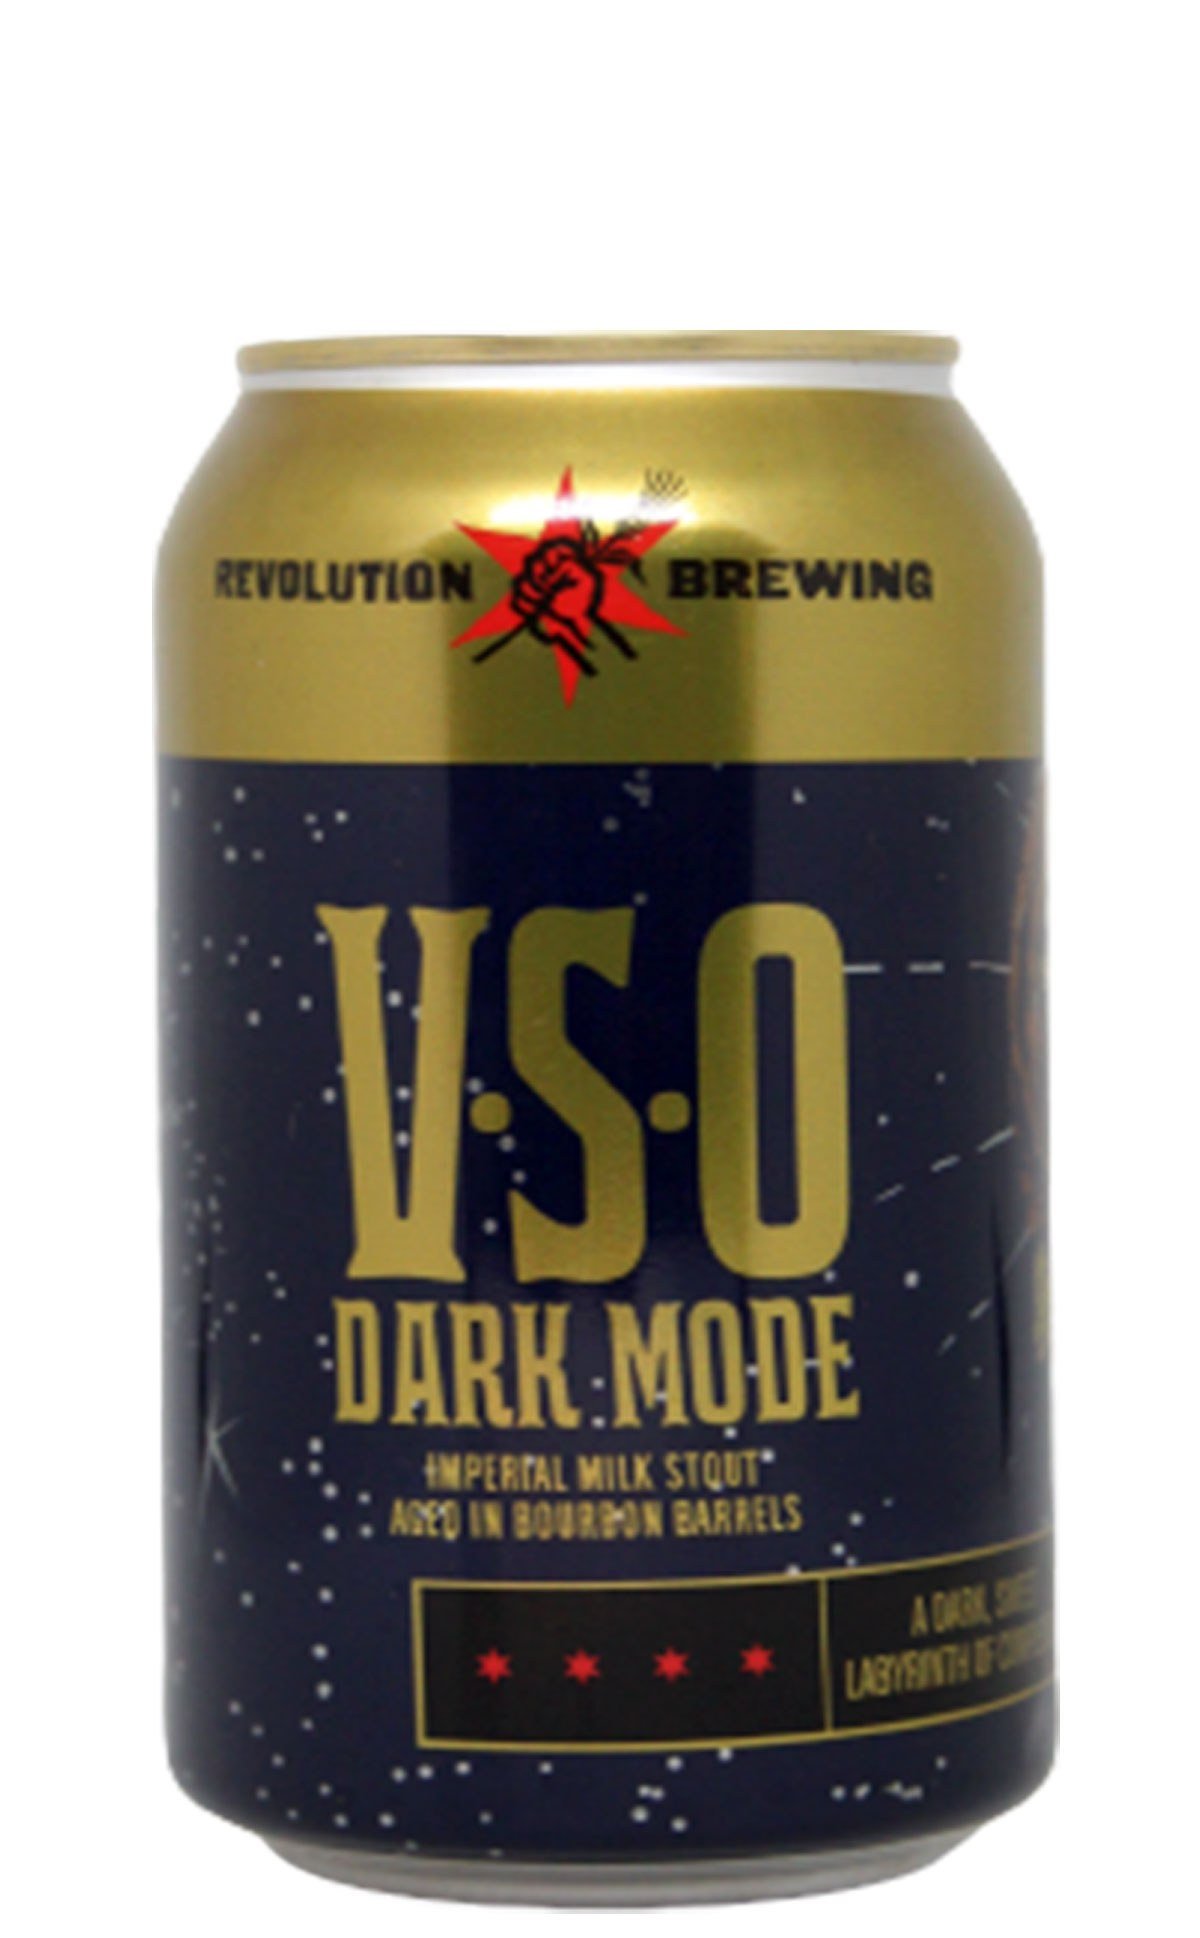 V.S.O. Dark Mode